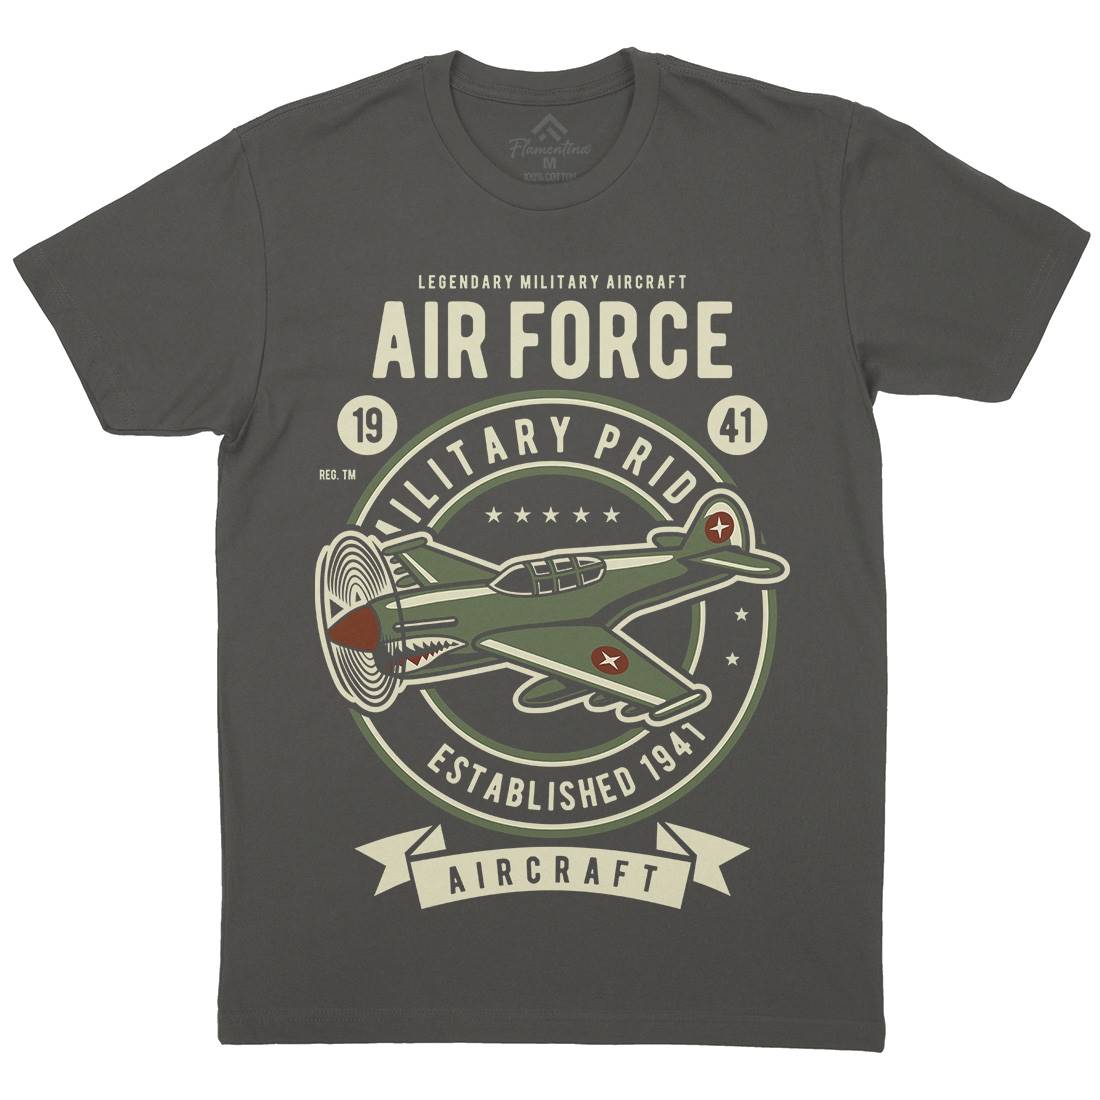 Air Force Mens Organic Crew Neck T-Shirt Army D502